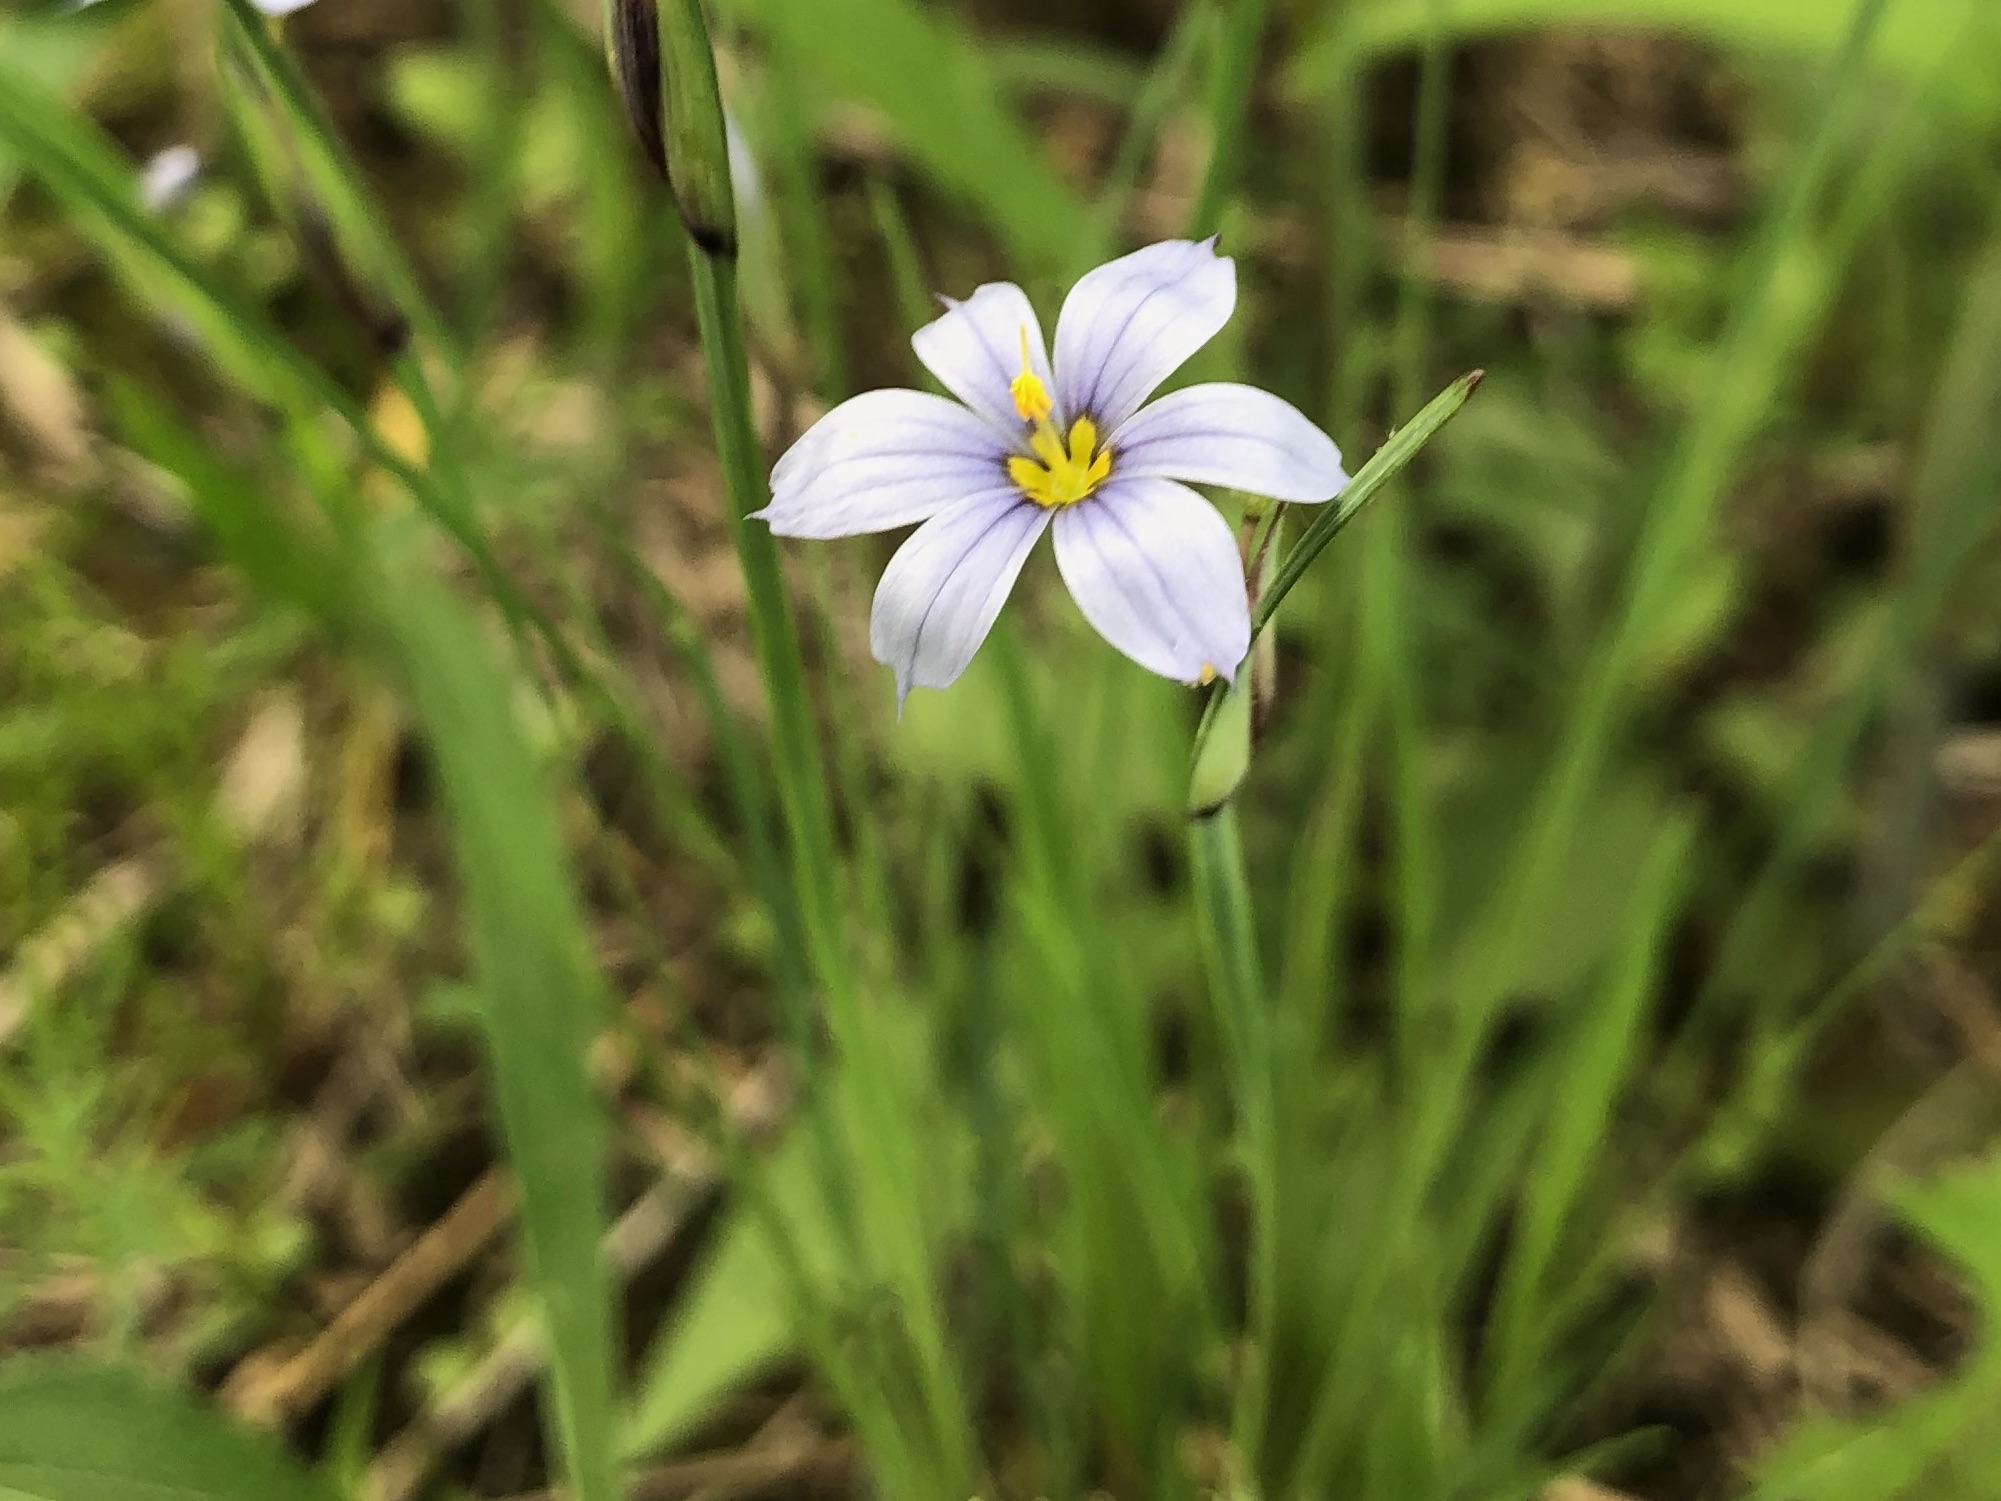 Blue-eyed Grass in UW Arbortetum-Madison Curtis Prairie in Madison, Wisconsin on May 30, 2022.